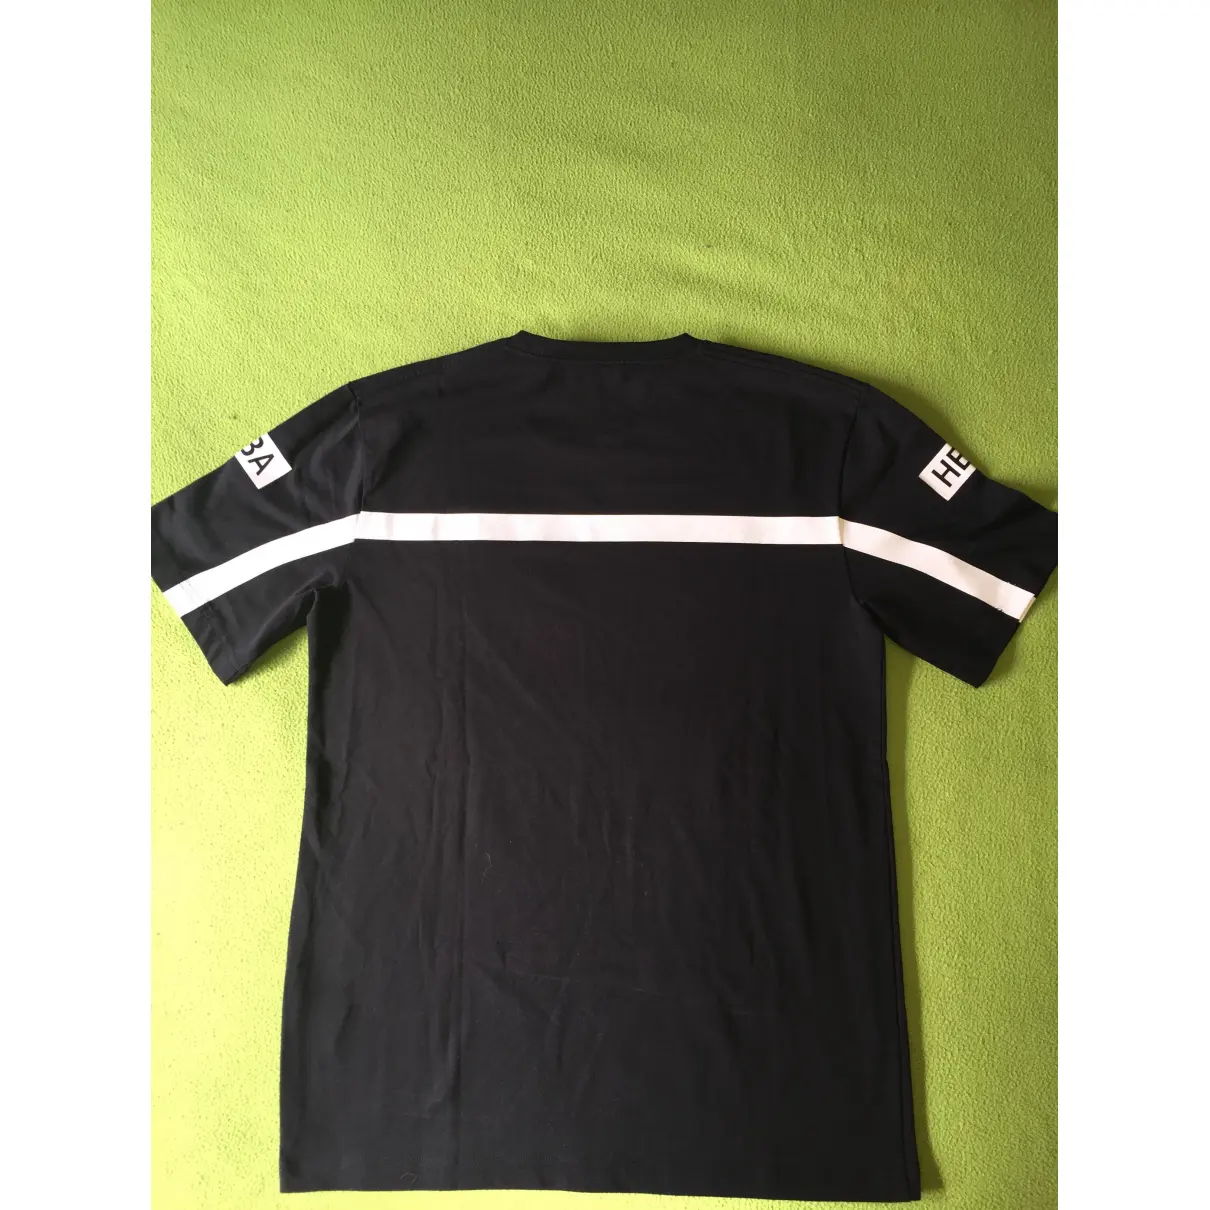 Buy Hba Black Cotton T-shirt online